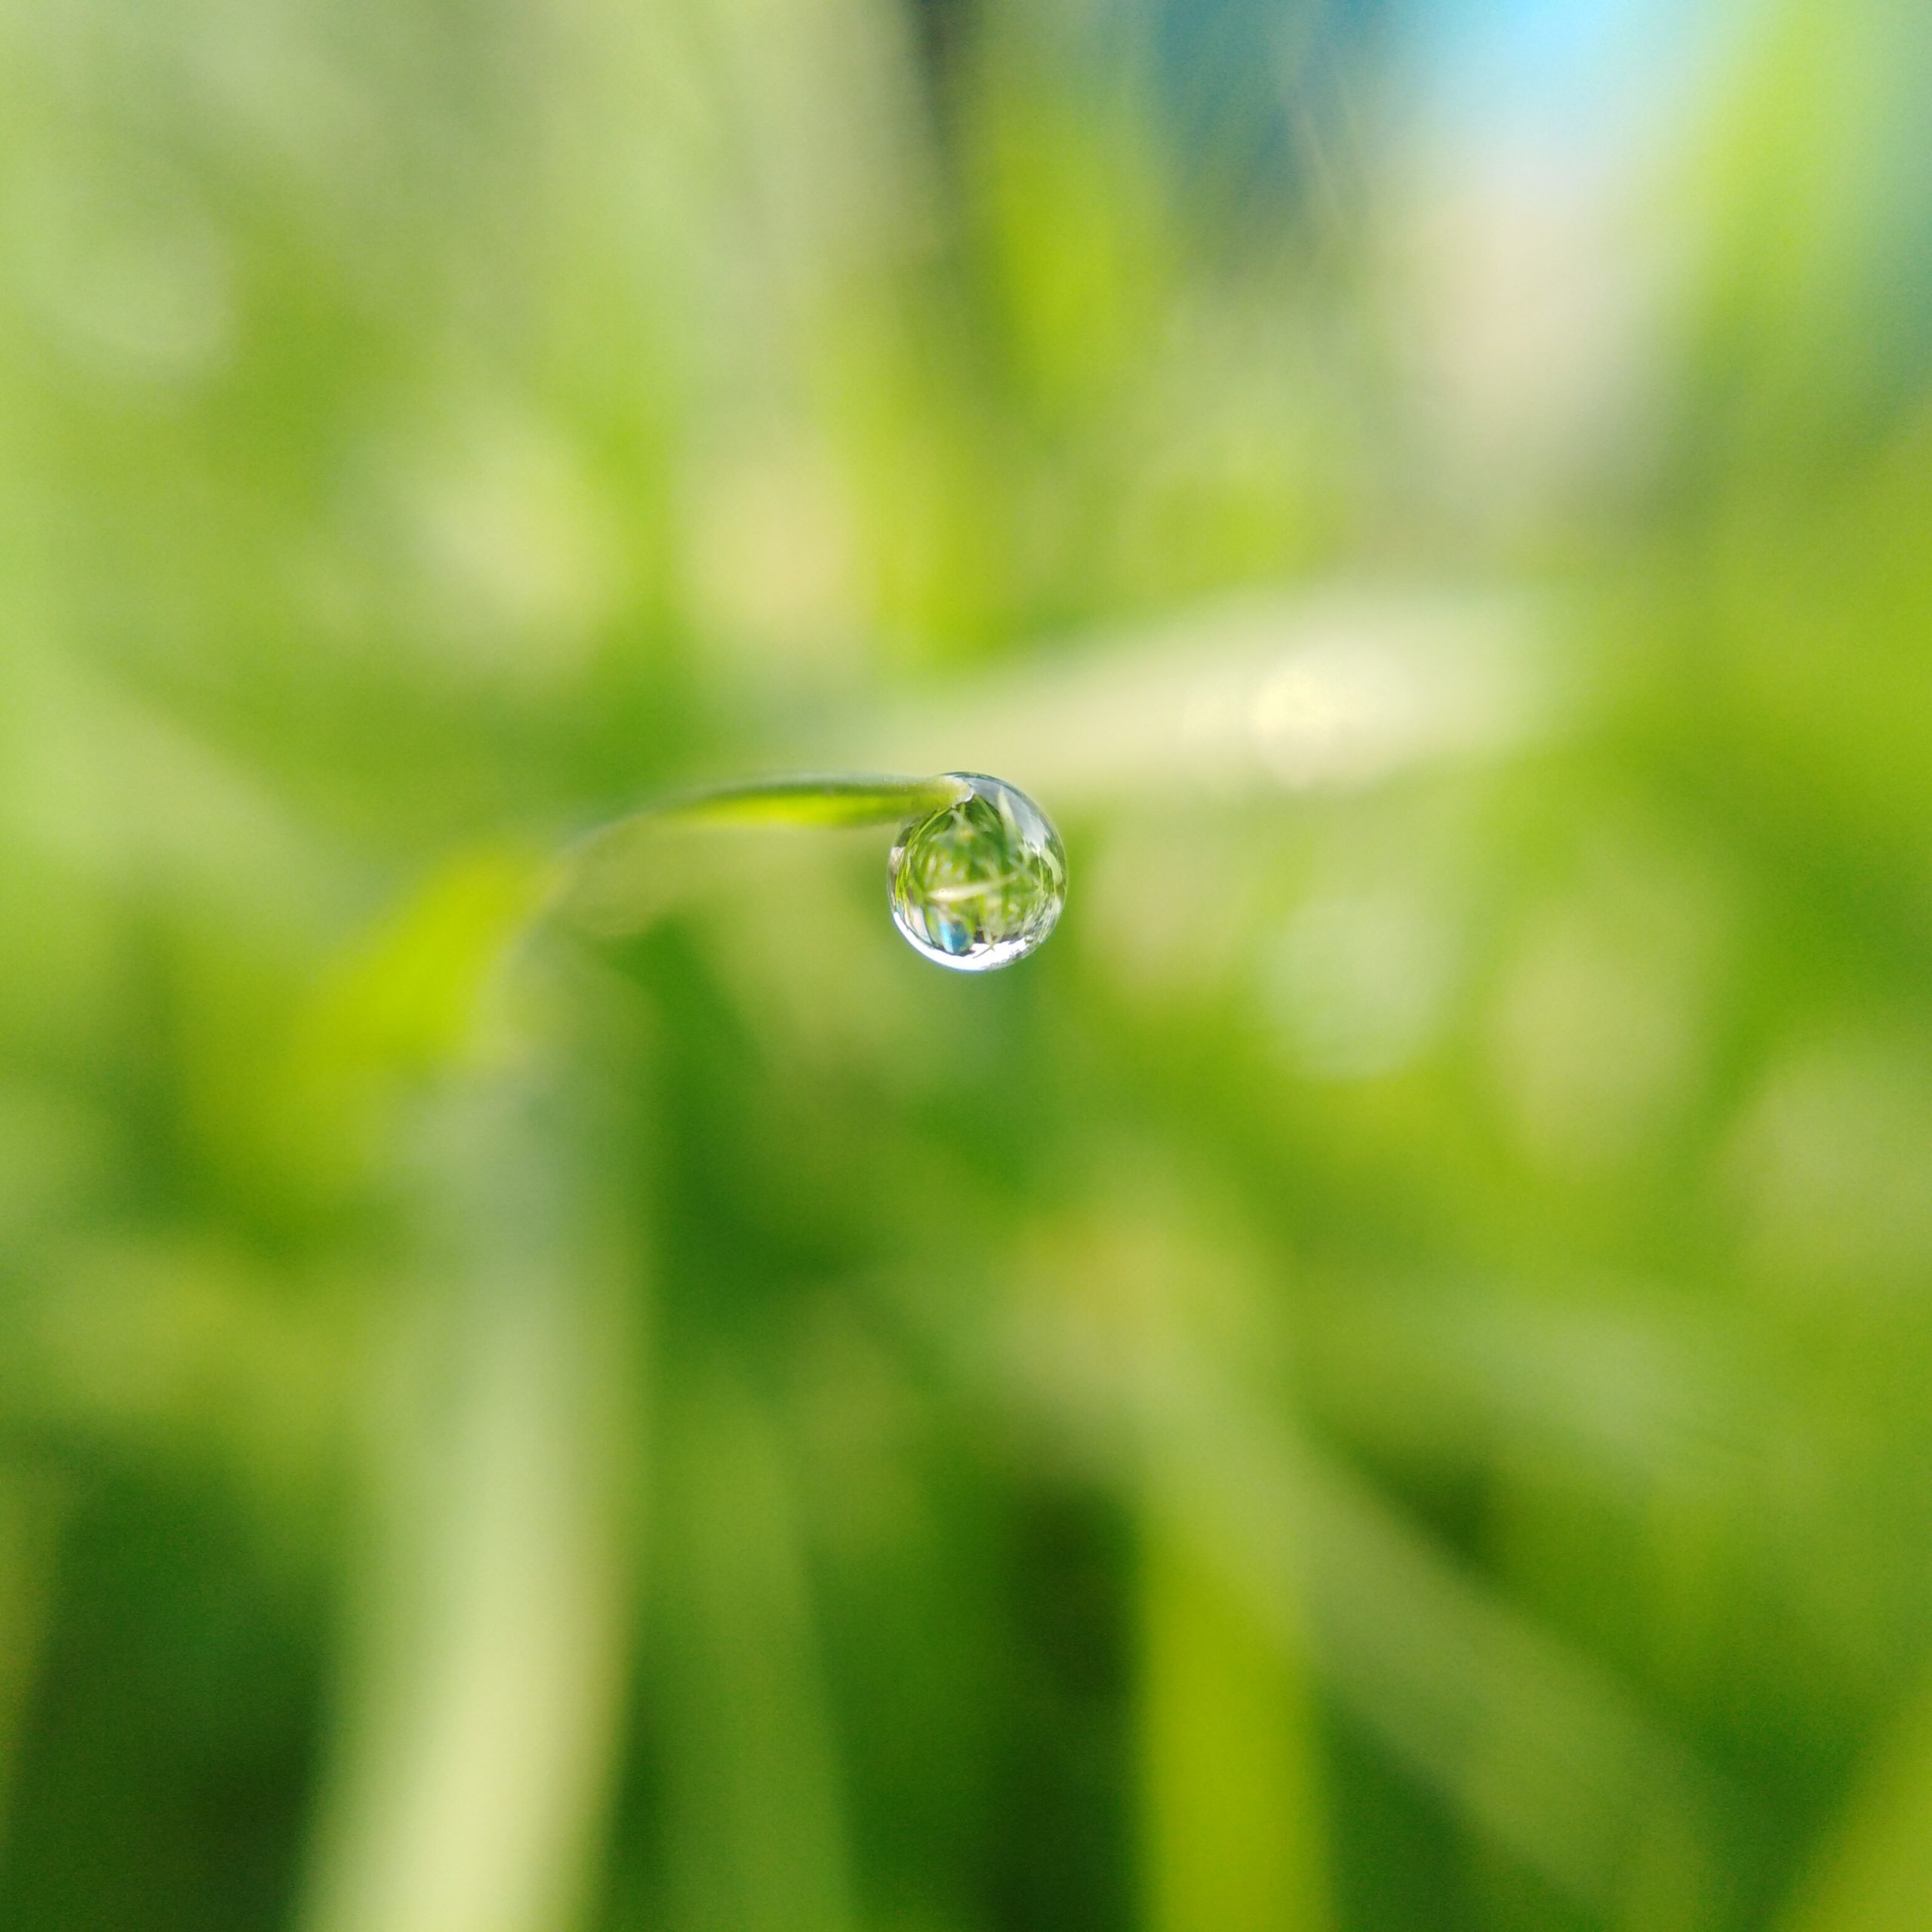 A water drop